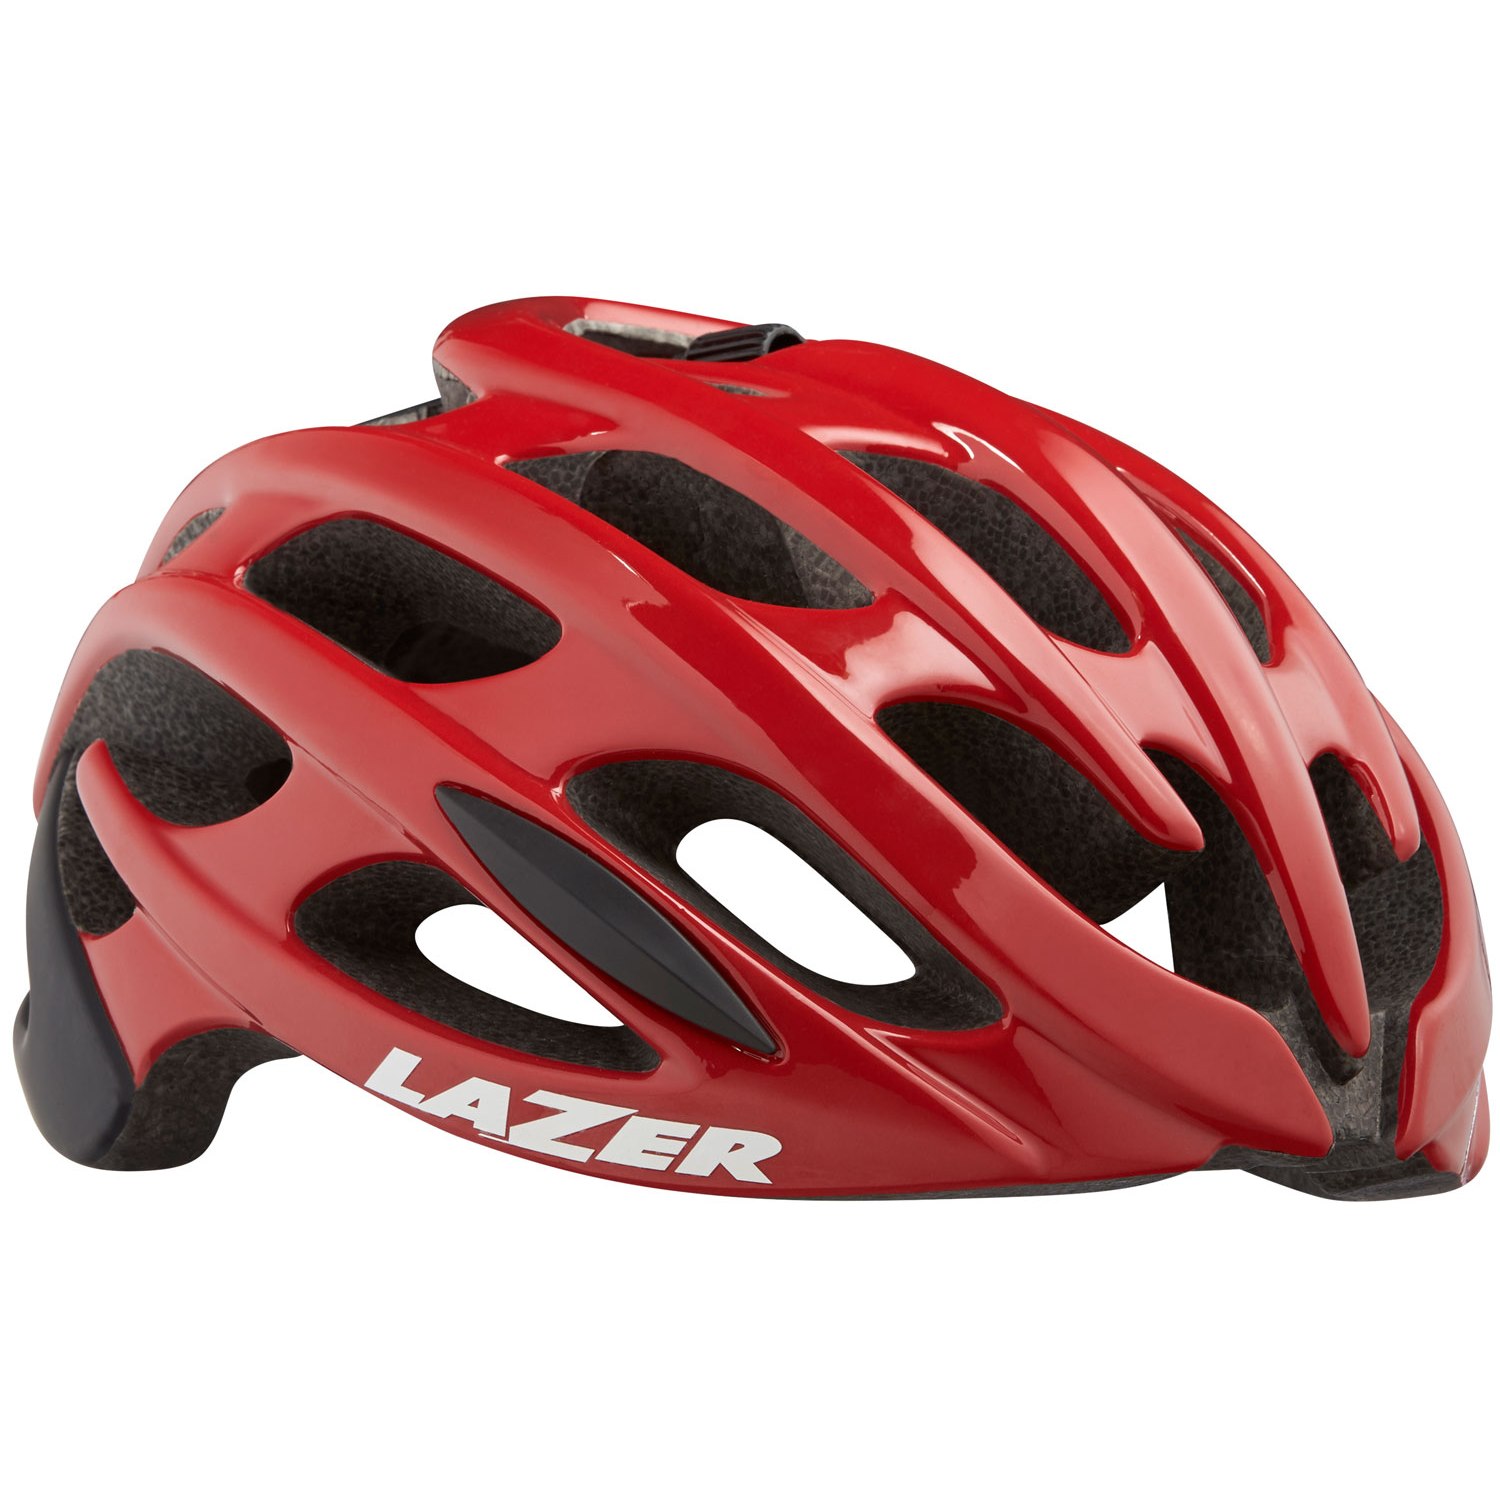 Picture of Lazer Blade+ Bike Helmet - red black